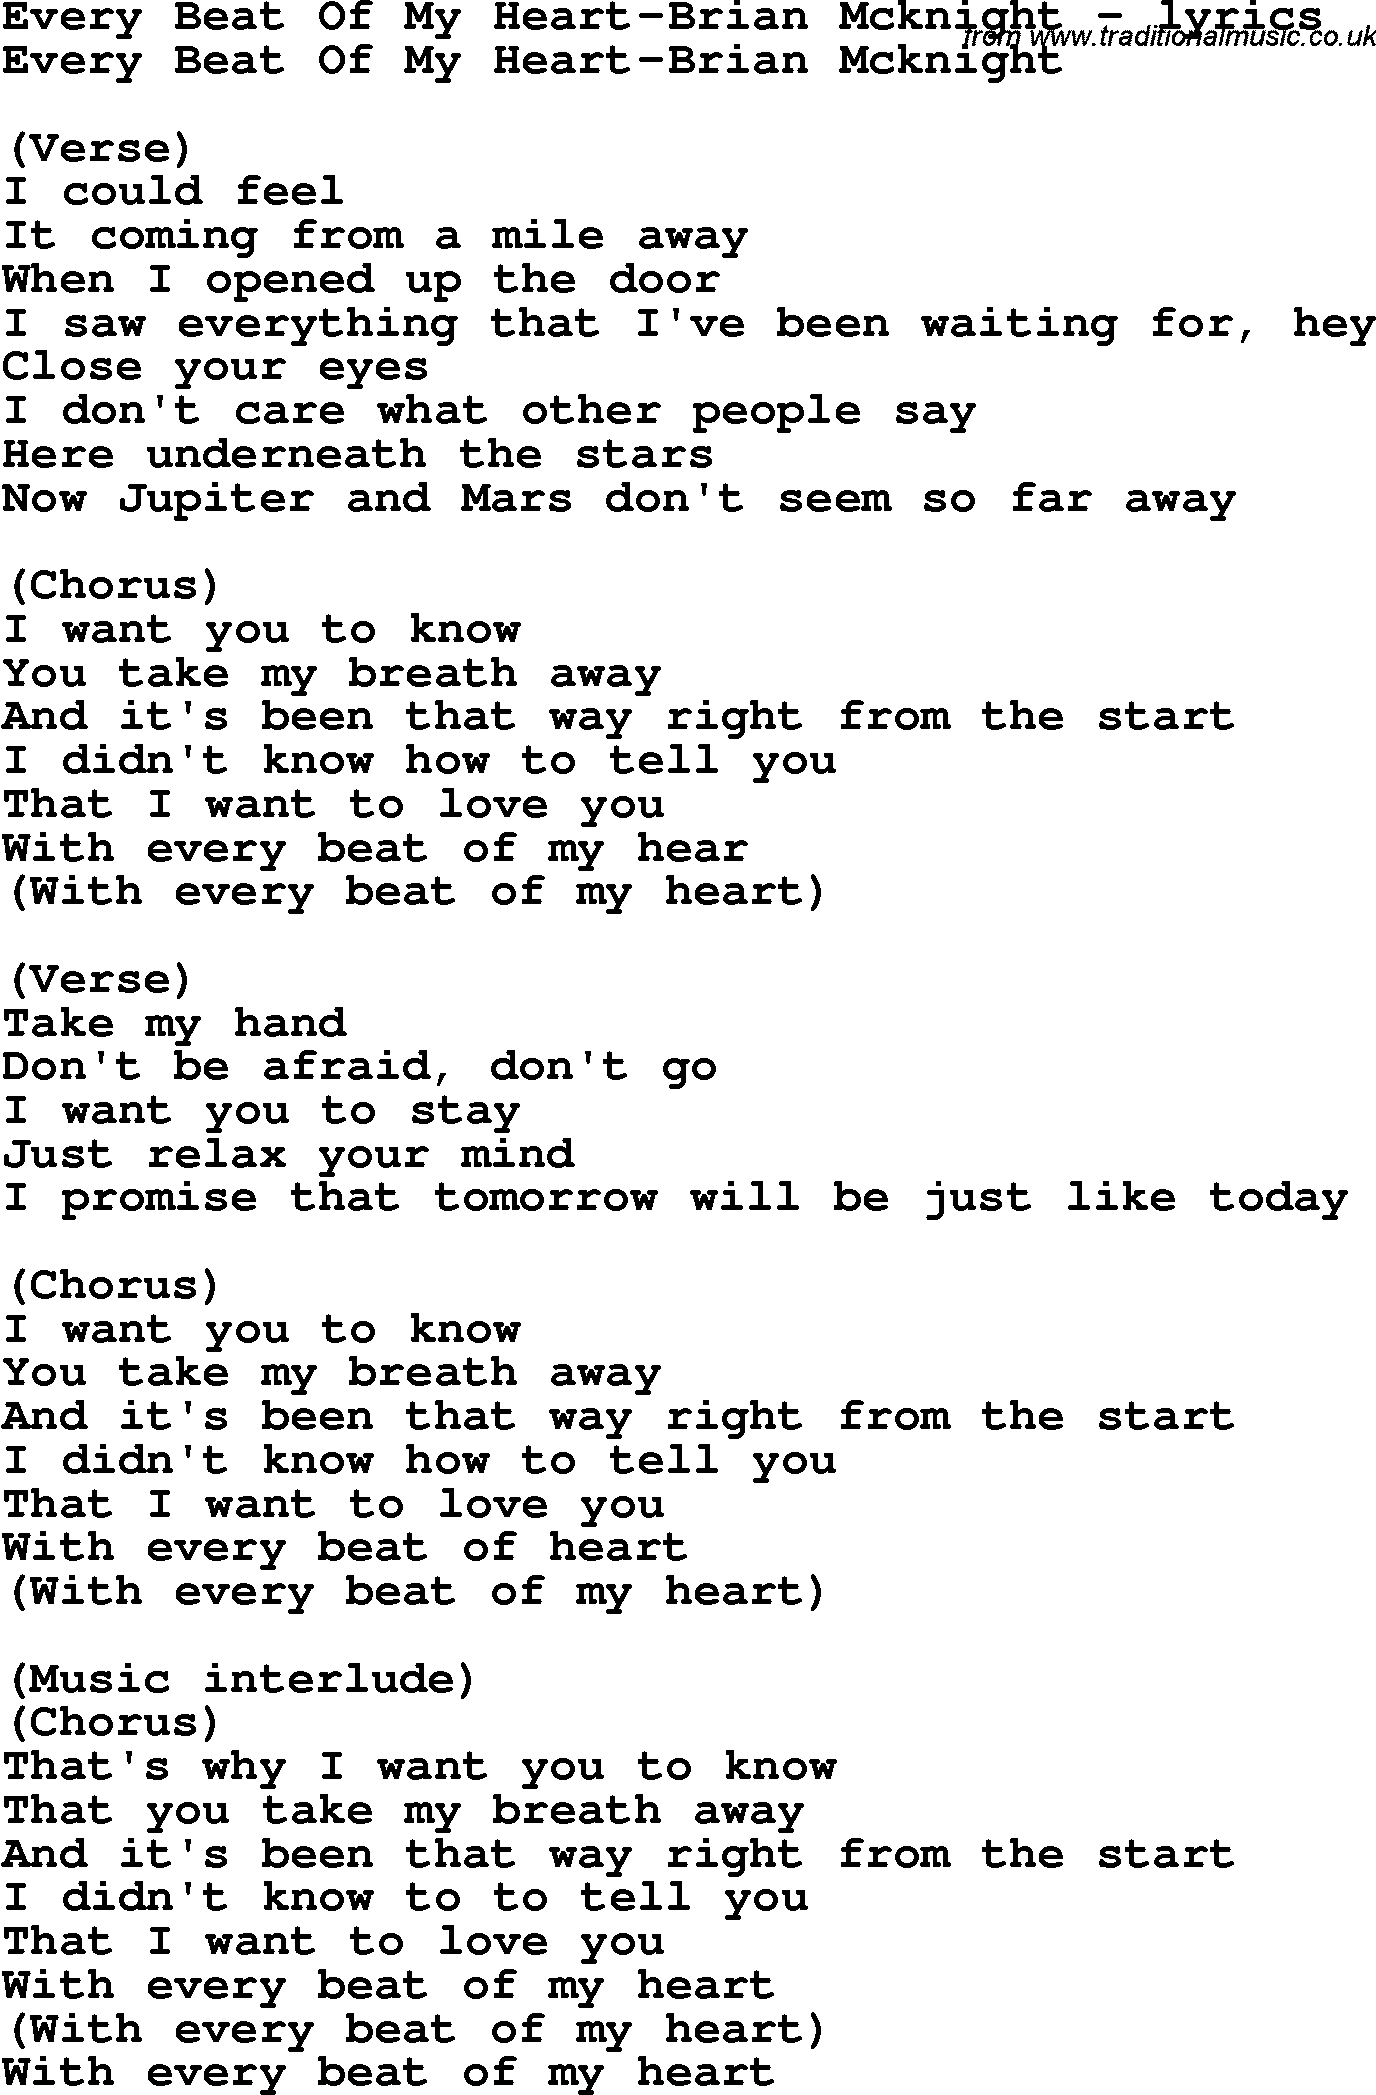 Love Song Lyrics for: Every Beat Of My Heart-Brian Mcknight